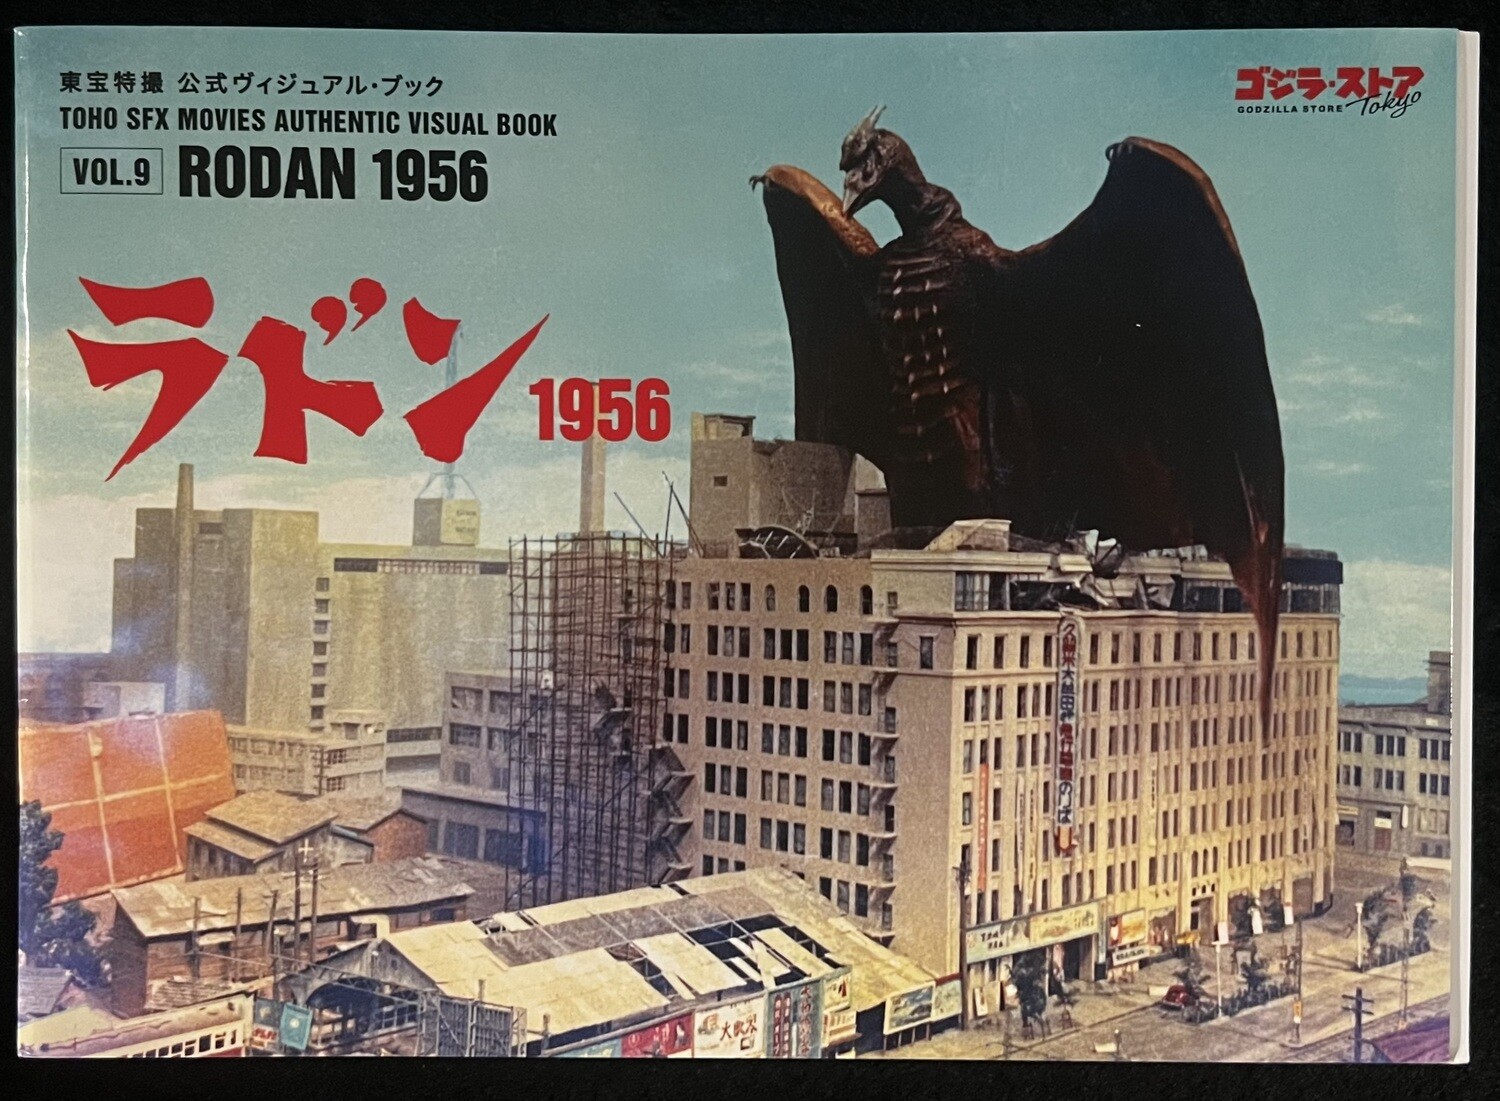 Rodan 1956: Vol. 9 — Toho SFX Movies Authentic Visual Book (Paperback, NEW)